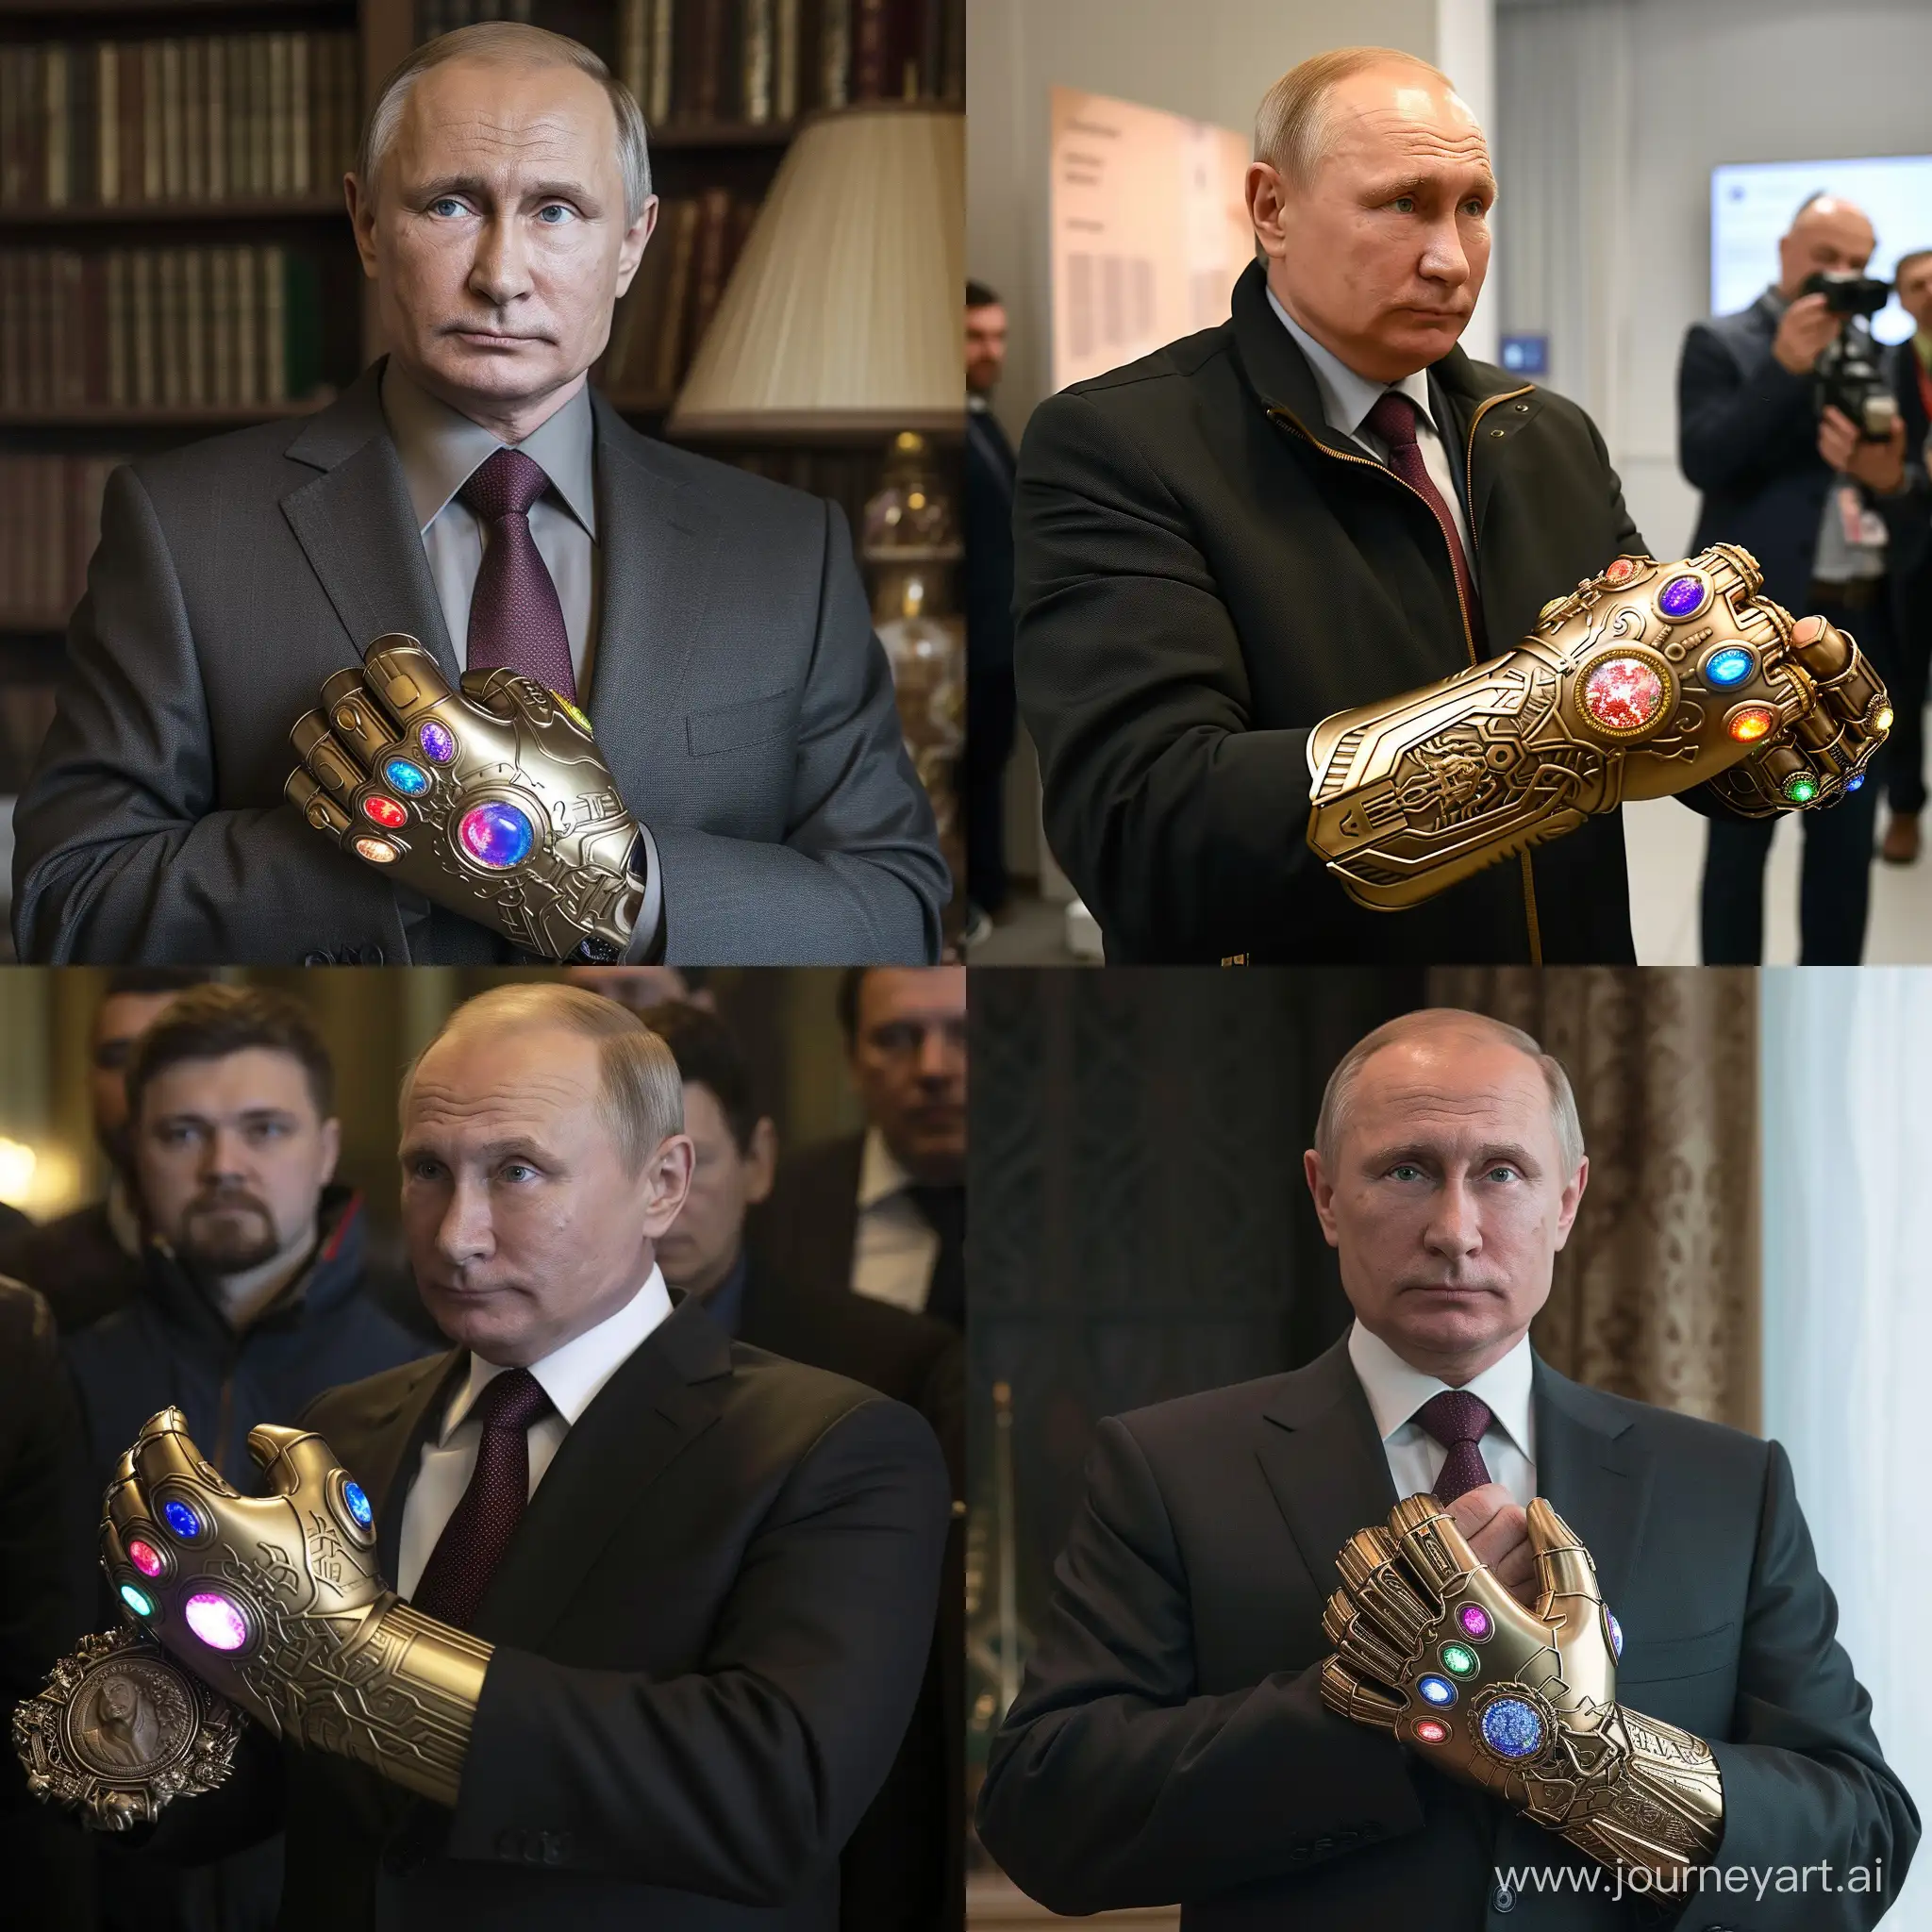 Putin-Wields-the-Infinity-Gauntlet-in-Majestic-Display-of-Power